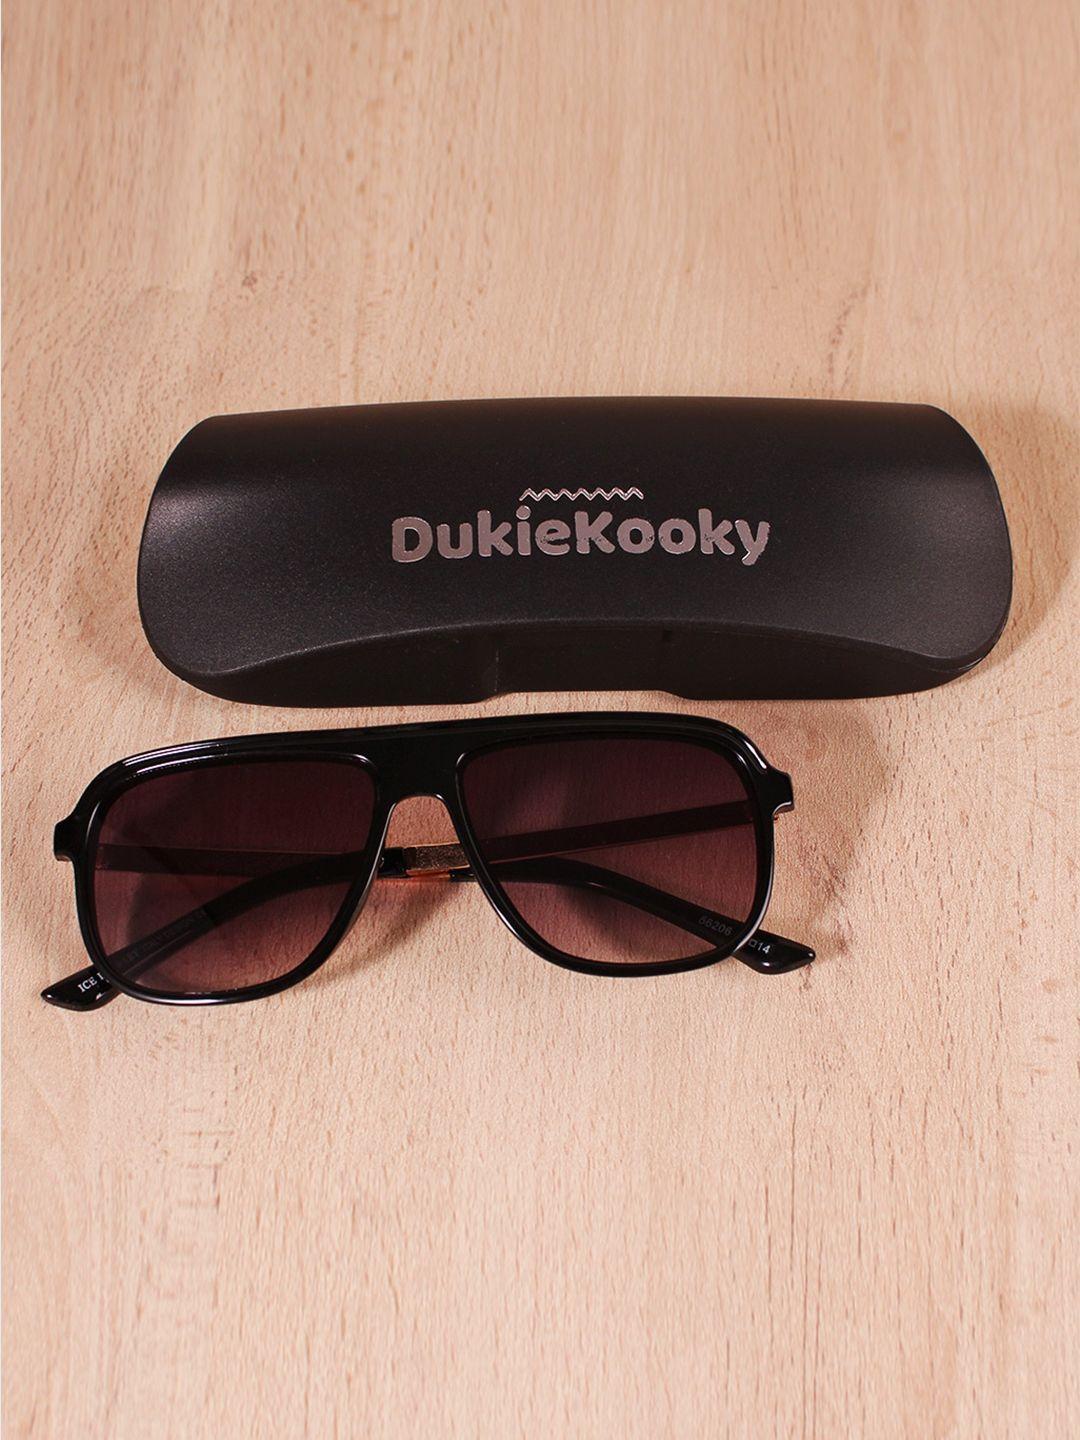 dukiekooky unisex kids black lens & black square sunglasses with uv protected lens